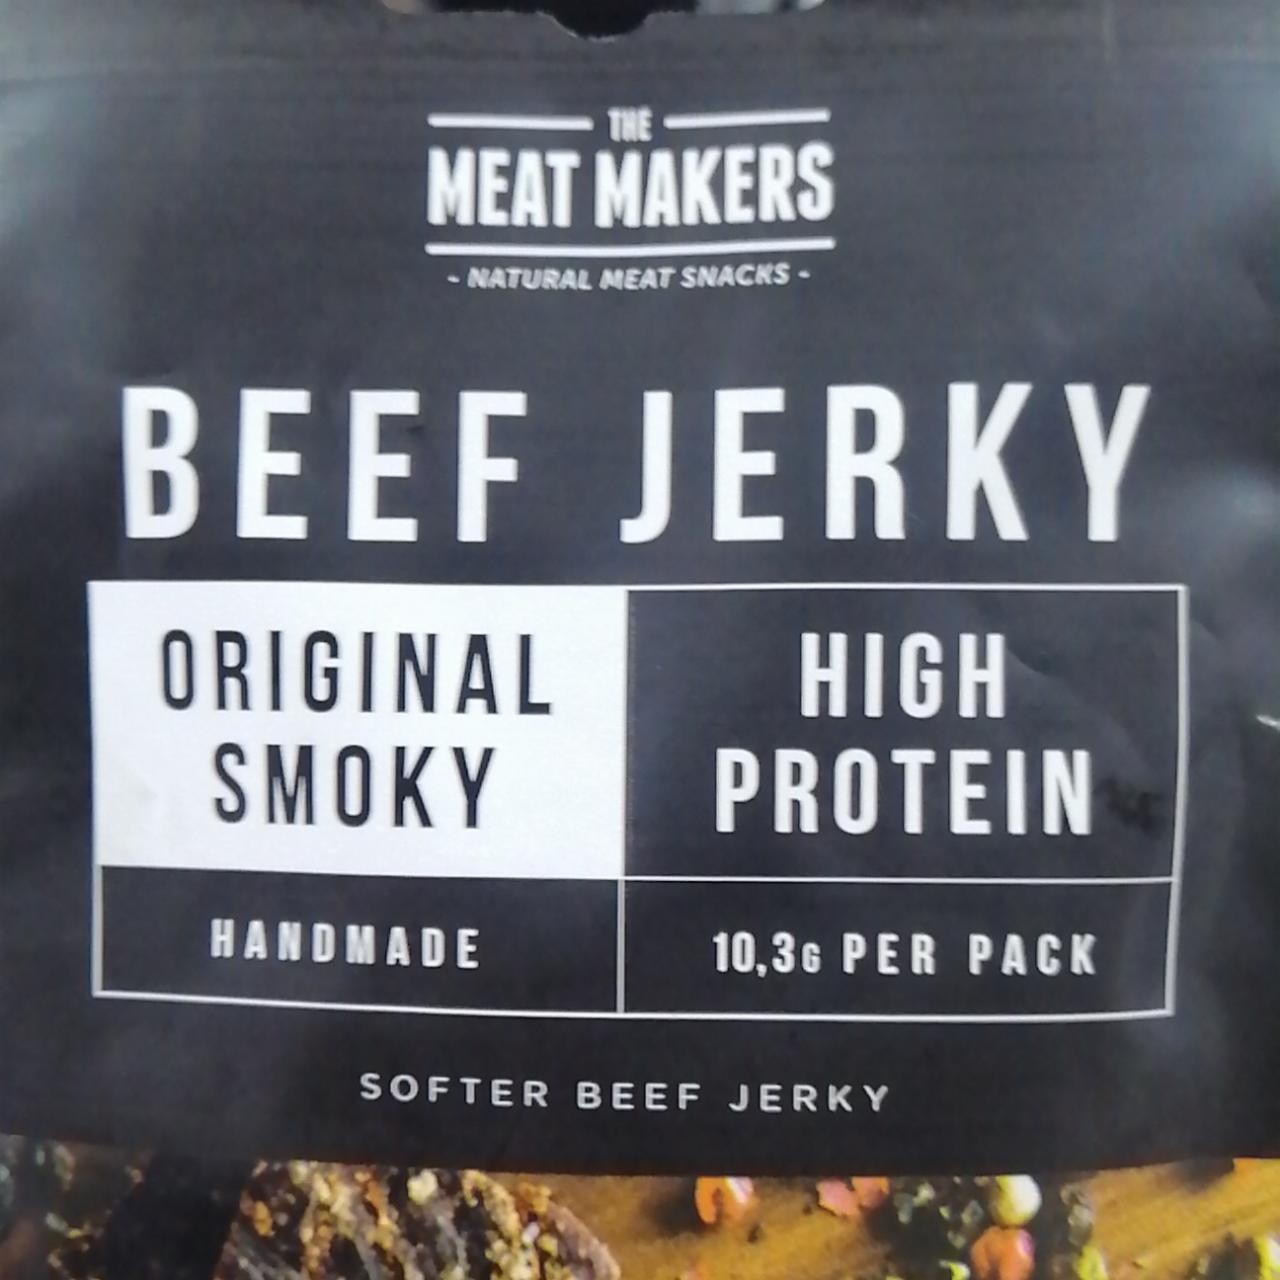 Zdjęcia - Beef Jerky The Meat Makers Original Smoky